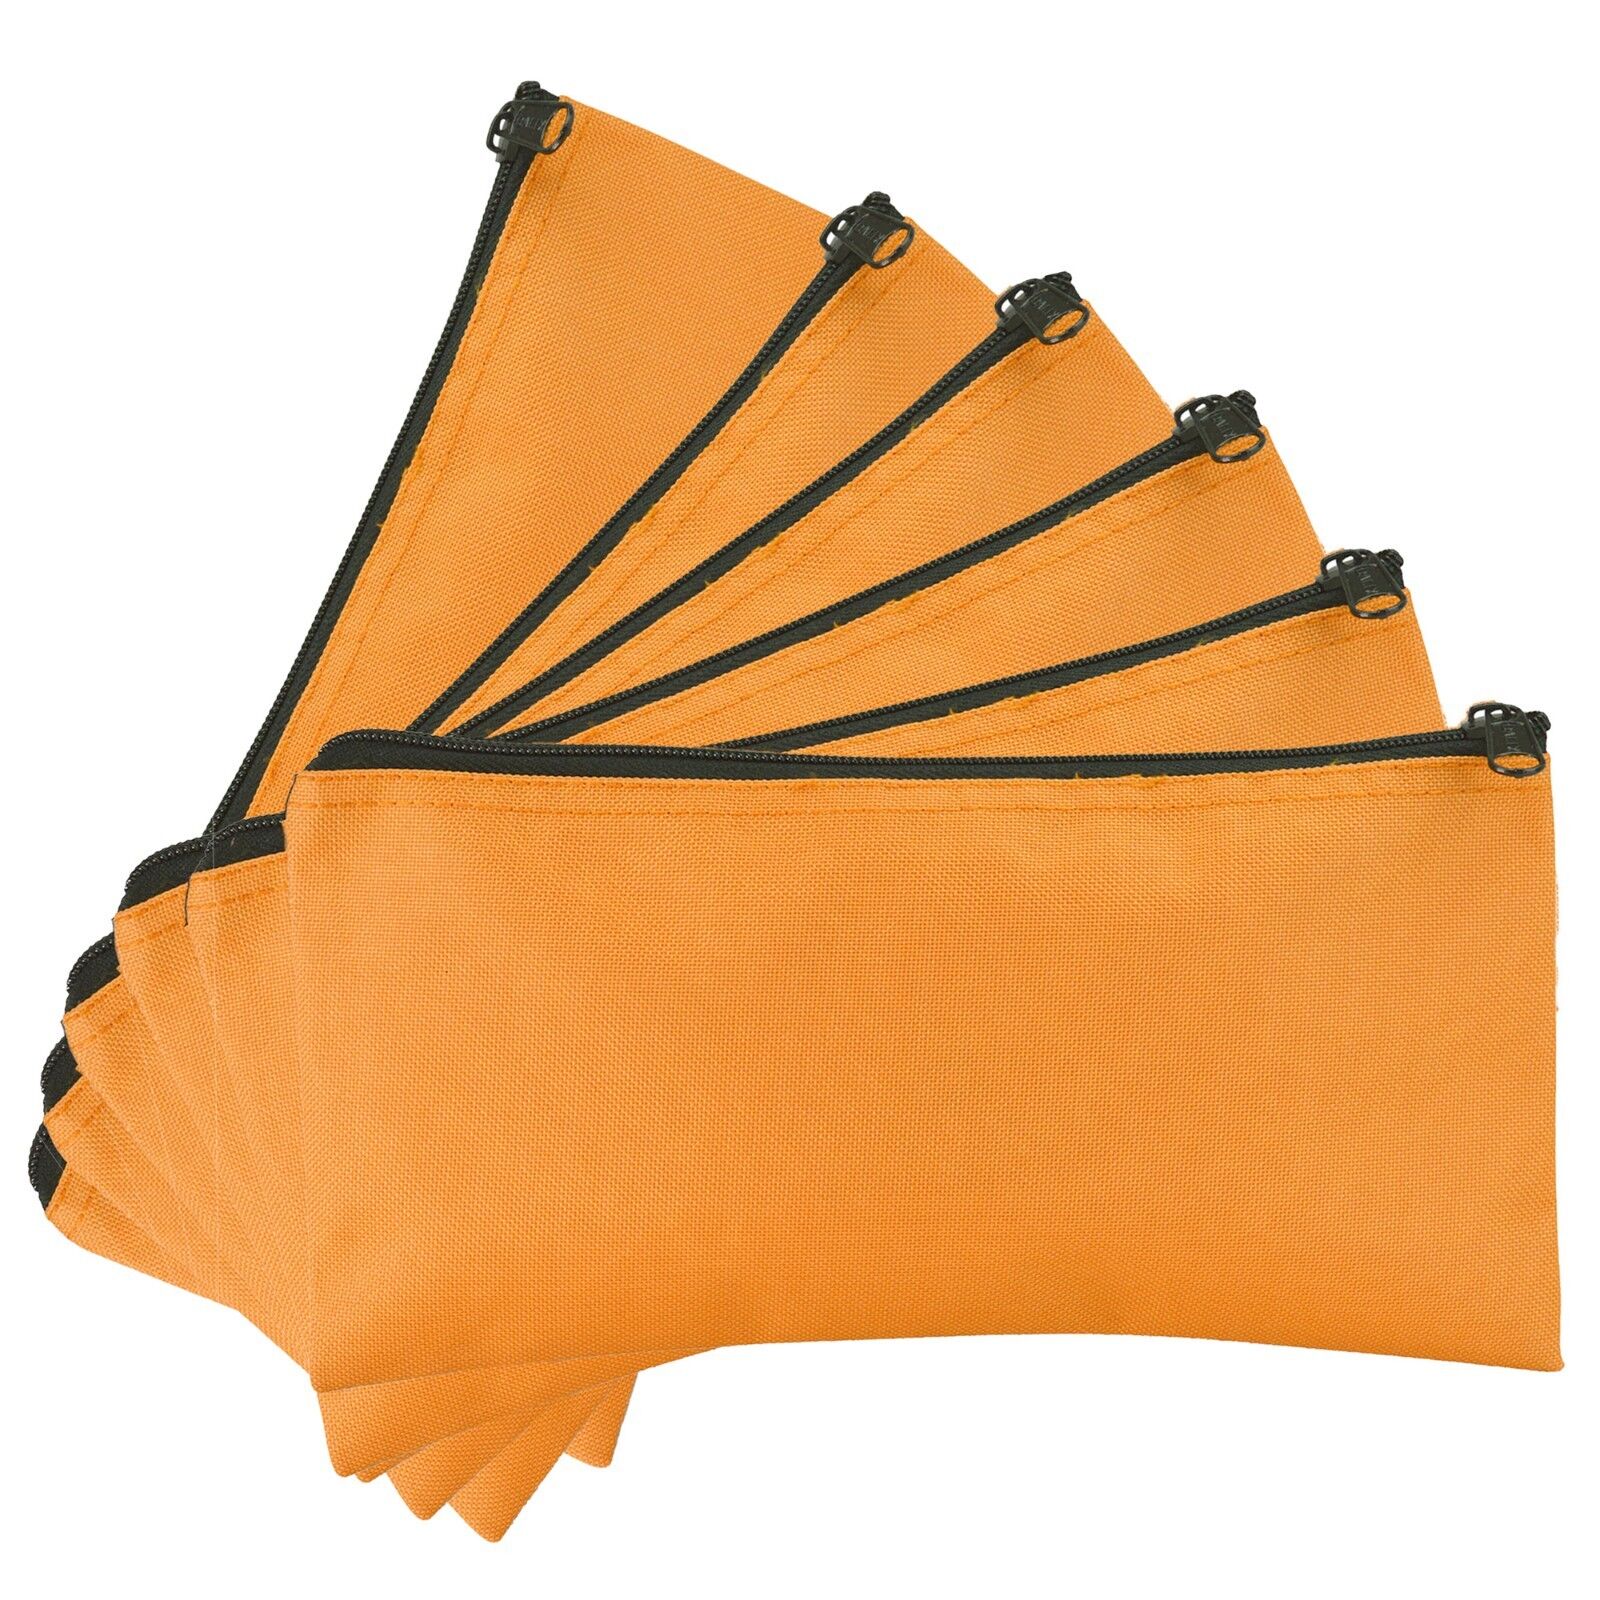 DALIX Zipper Bank Deposit Money Bags Cash Coin Pouch 6 Pack in Orange